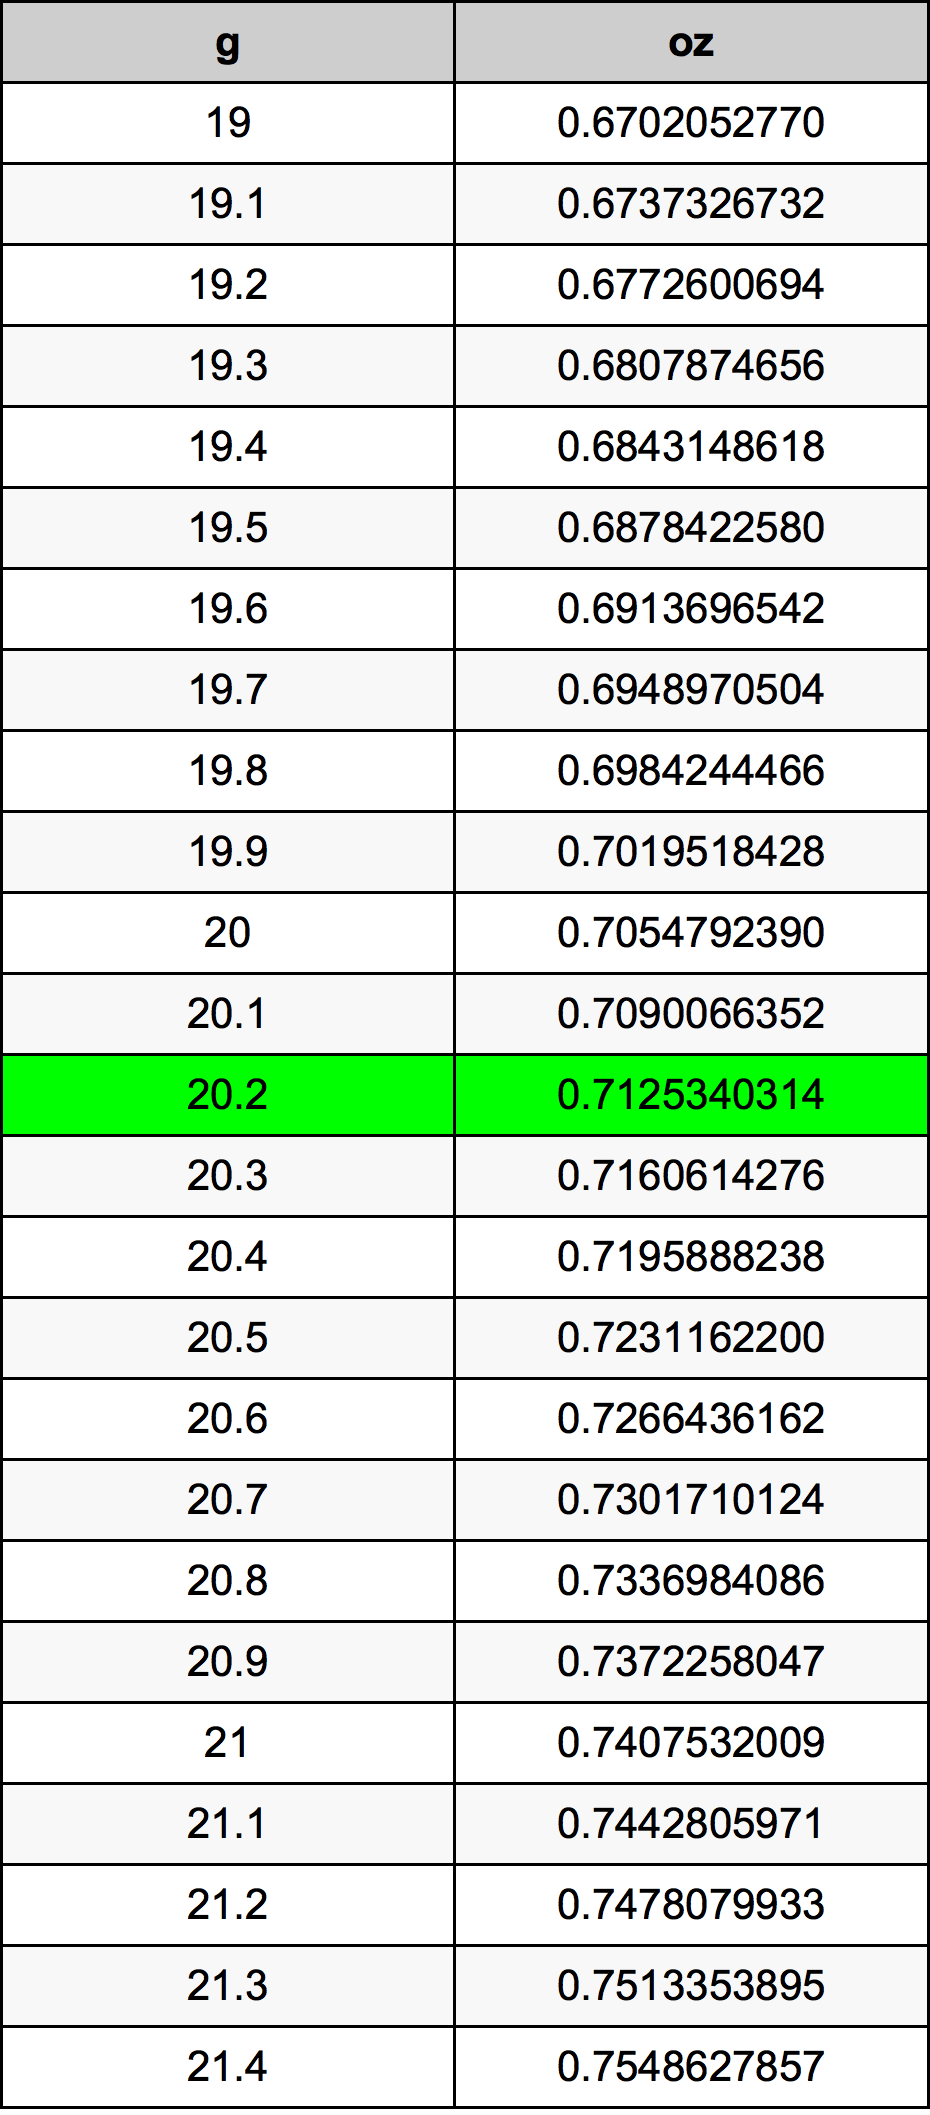 20.2 غرام جدول تحويل